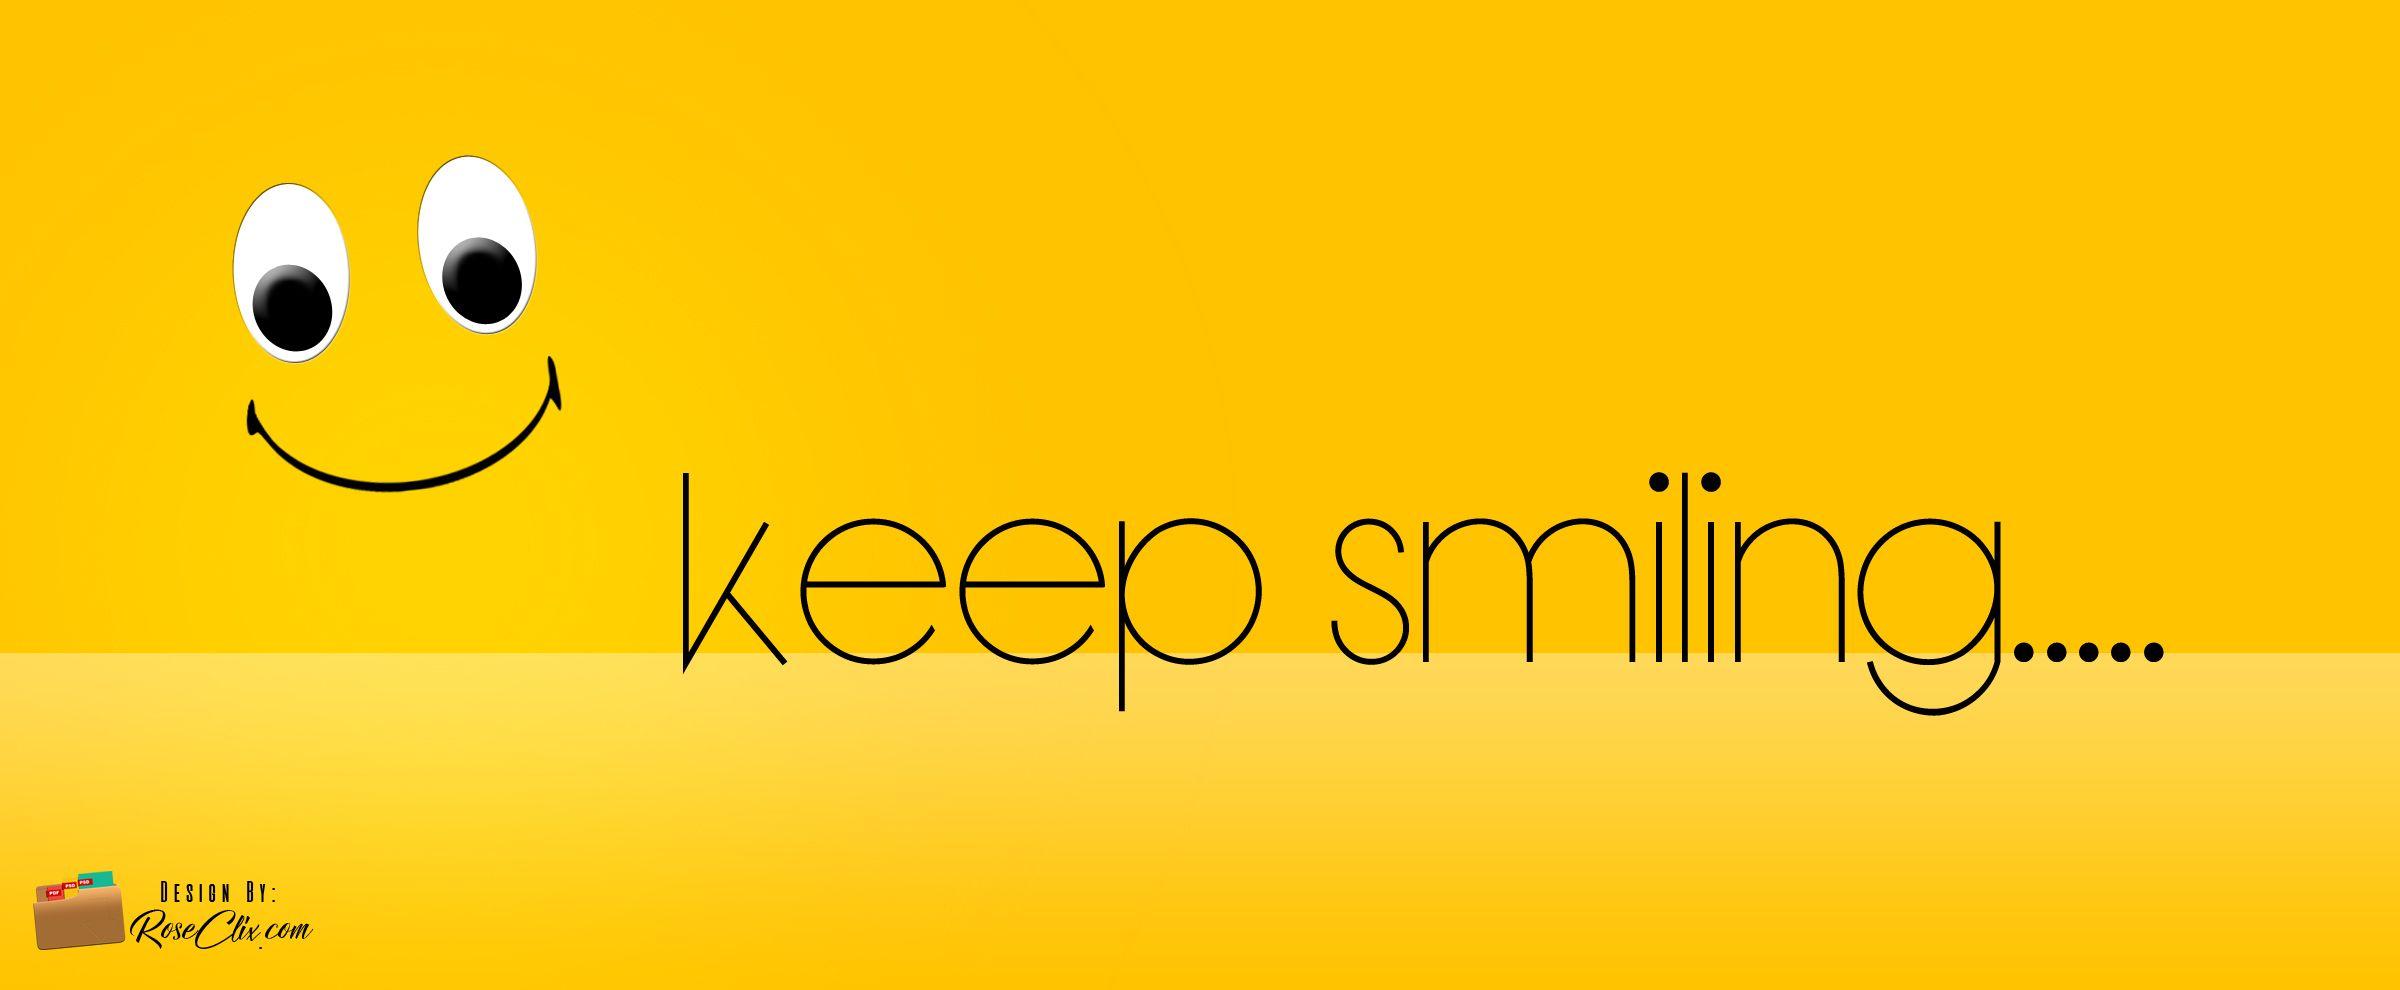 Keep Smiling Free Fb Cover Design Timeline